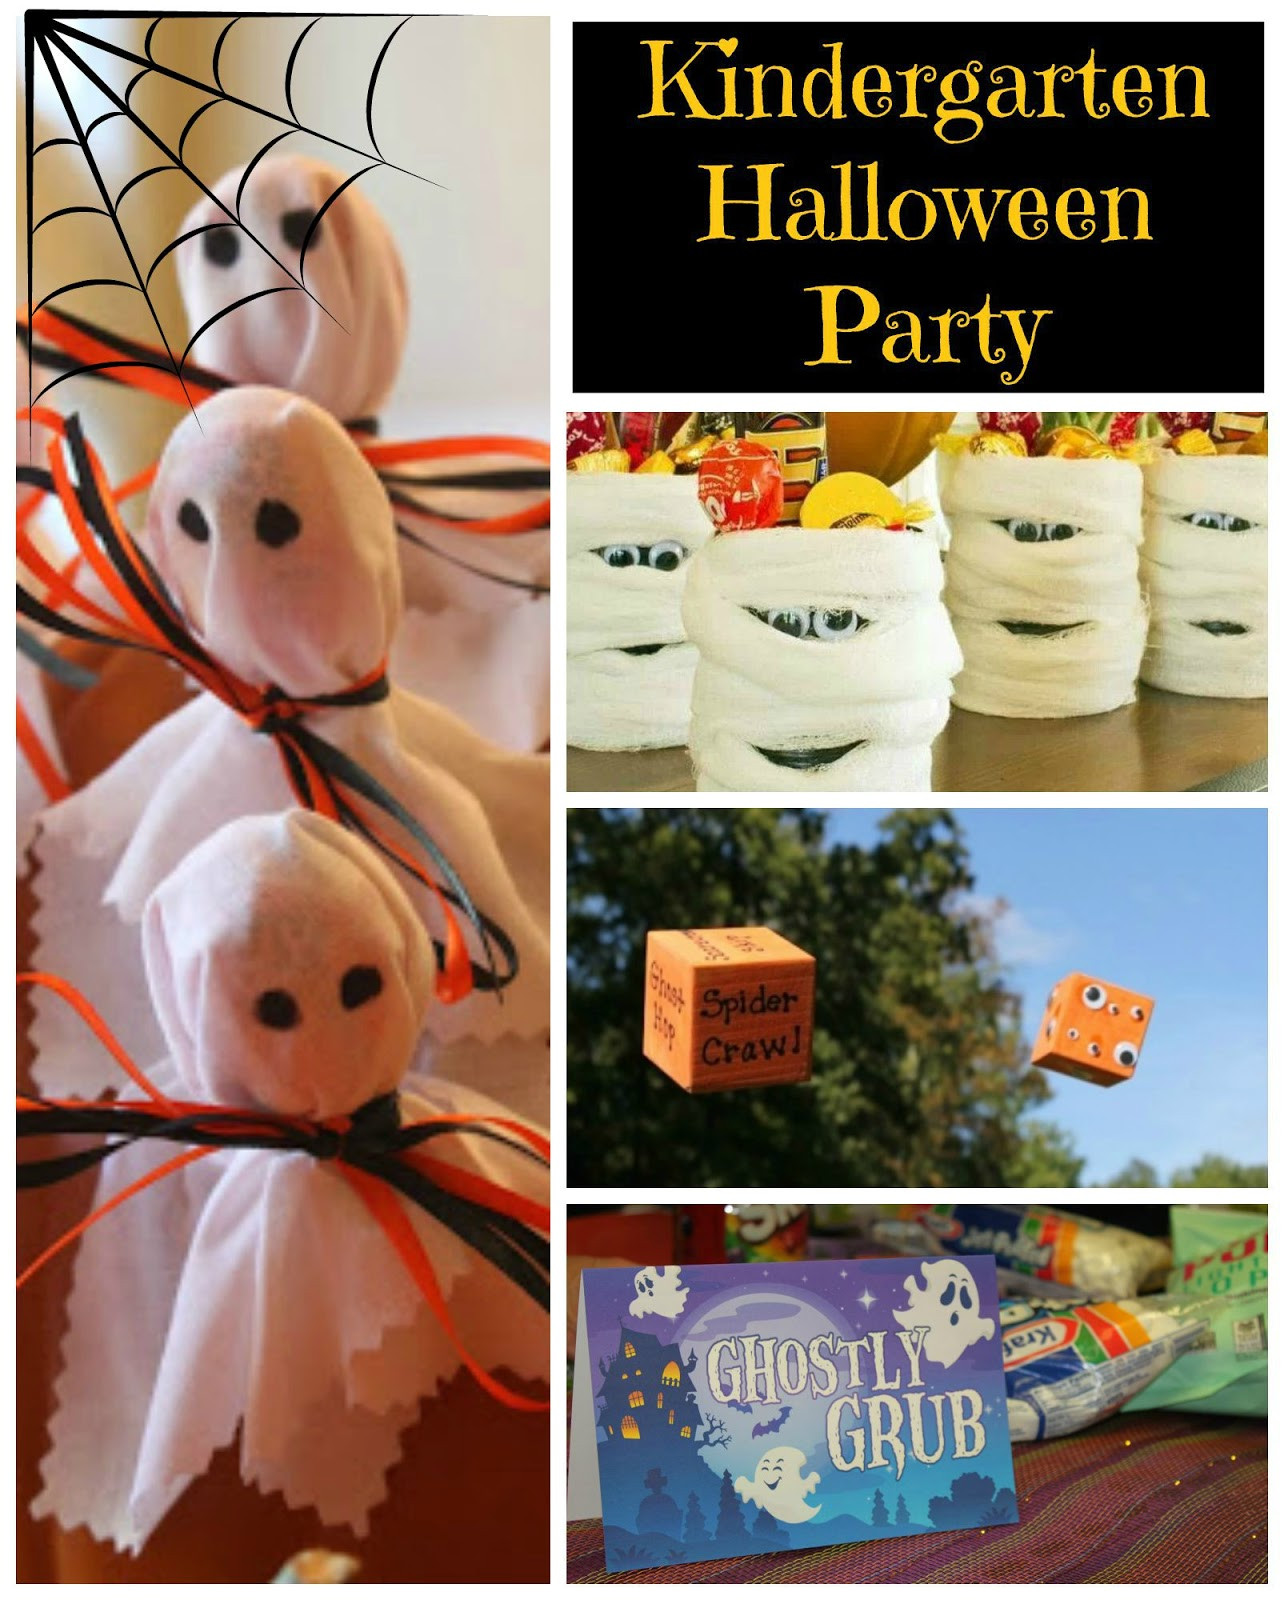 Kindergarten Halloween Party Ideas
 Keeping up with the Kiddos Kindergarten Halloween Party